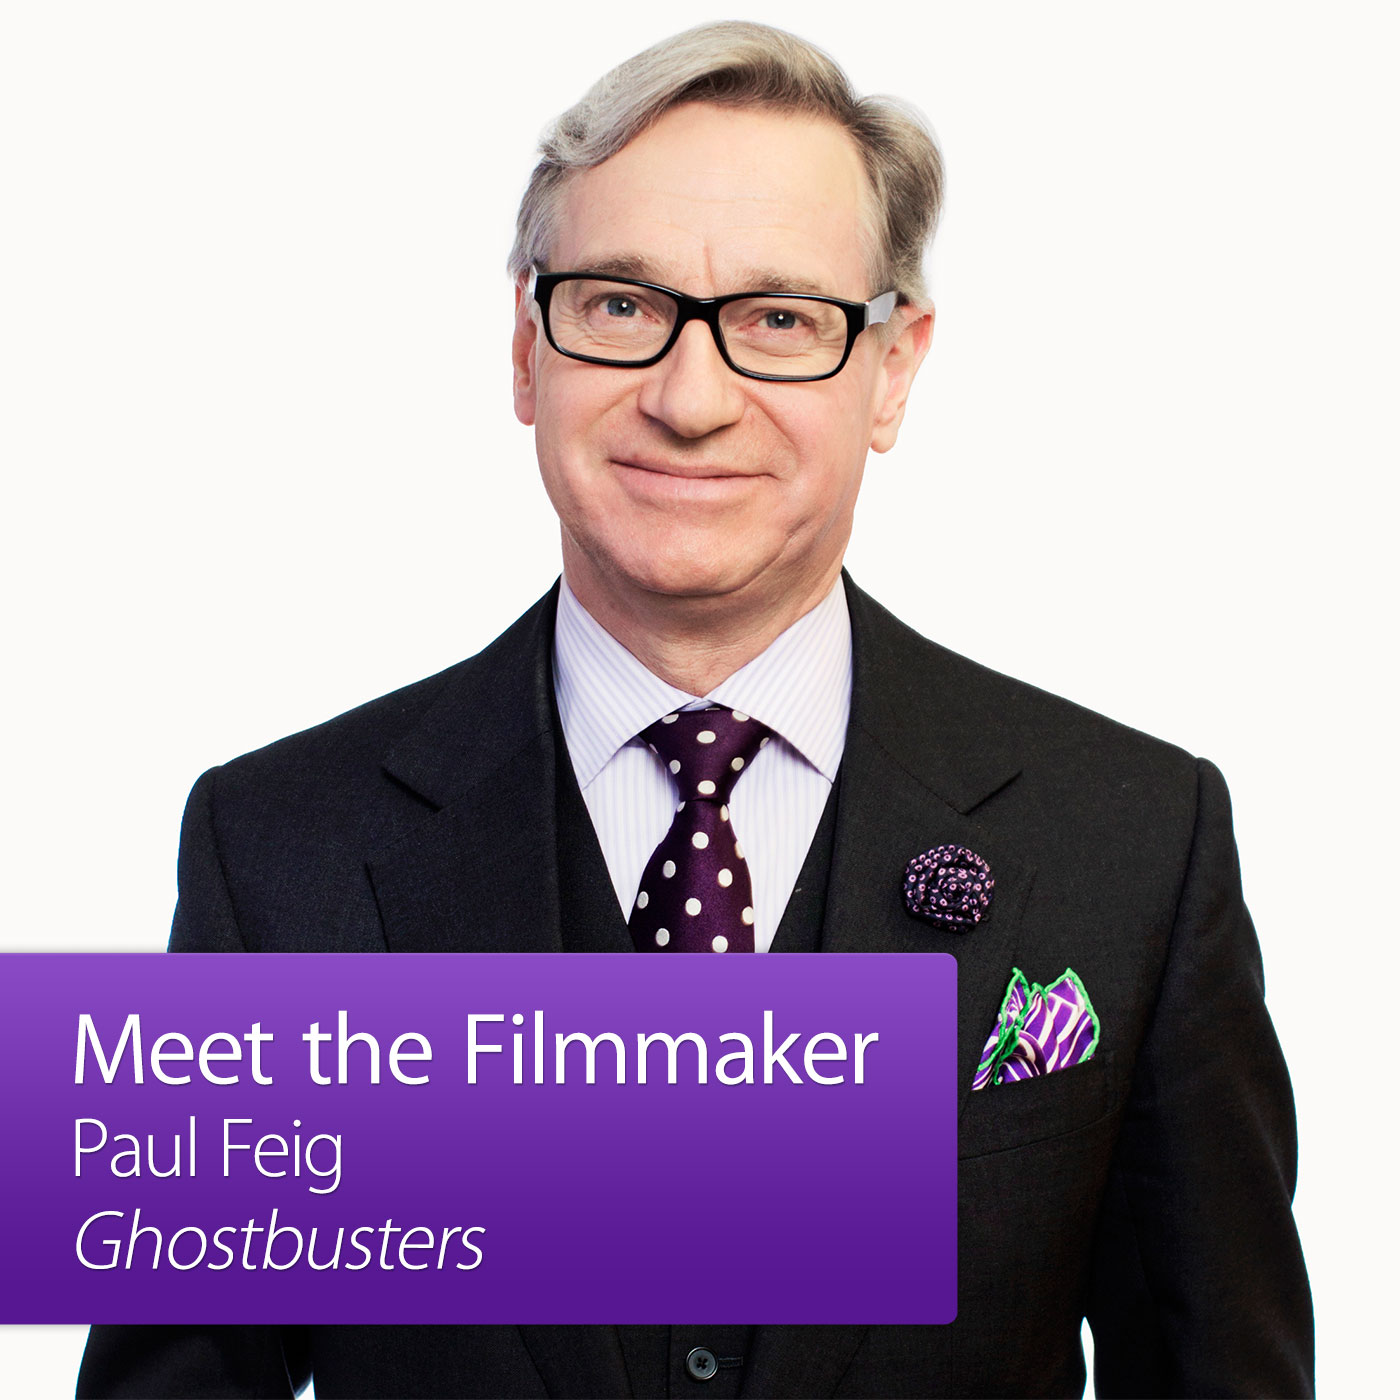 Ghostbusters: Meet the Filmmaker